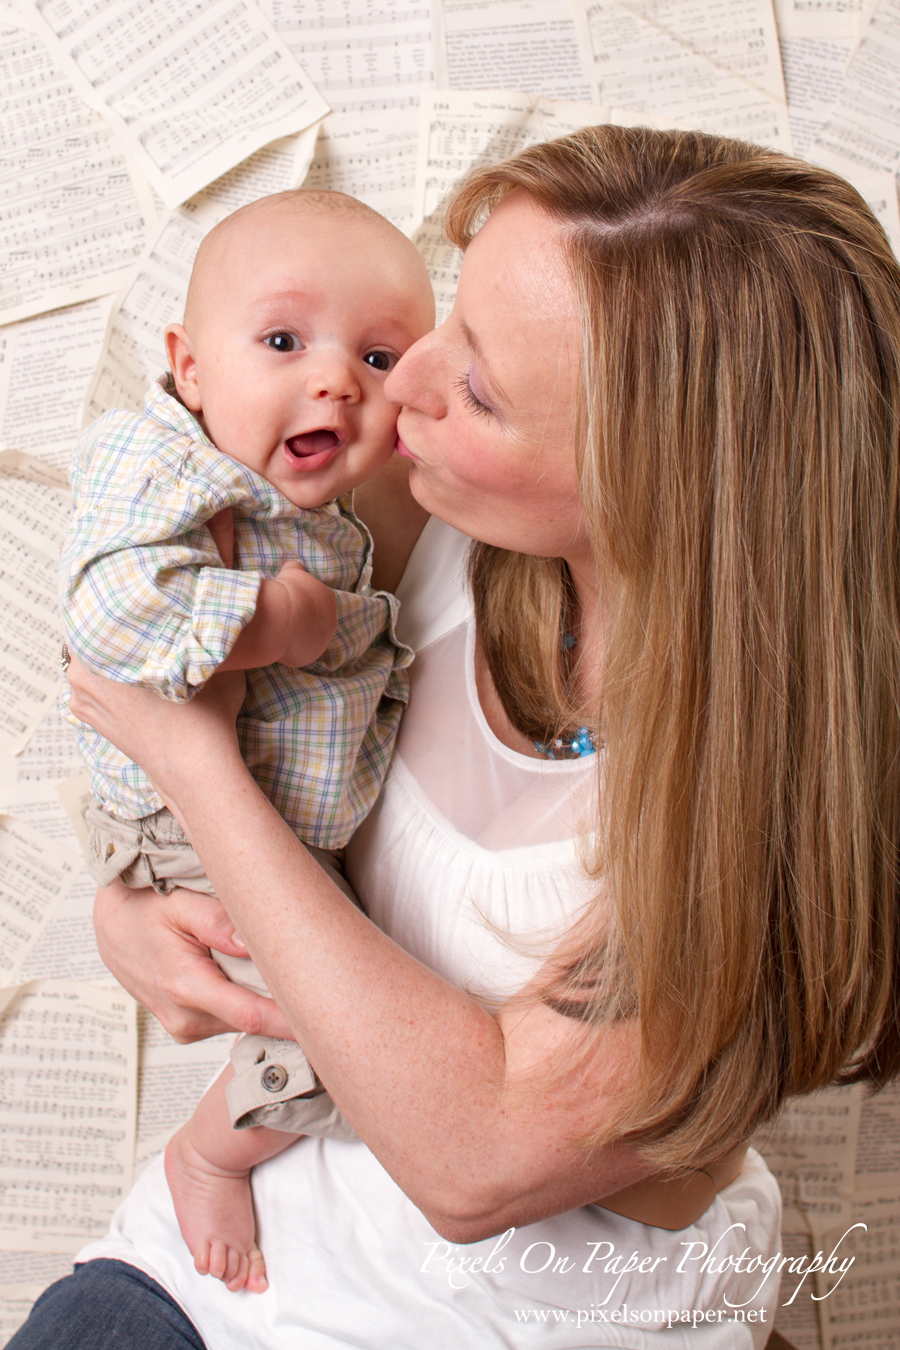 Baby Isaiah with Mom in studio portrait photo